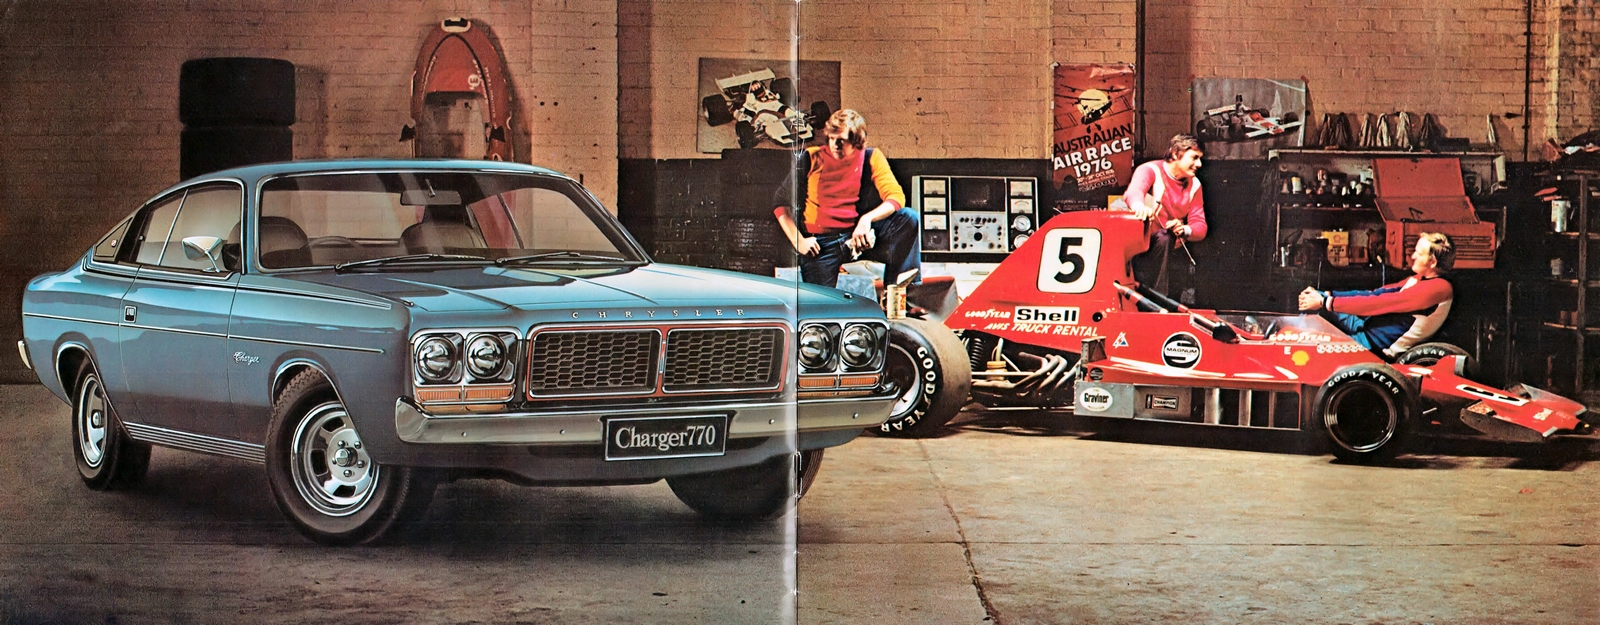 n_1977 Chrysler CL Charger 770-02-03.jpg